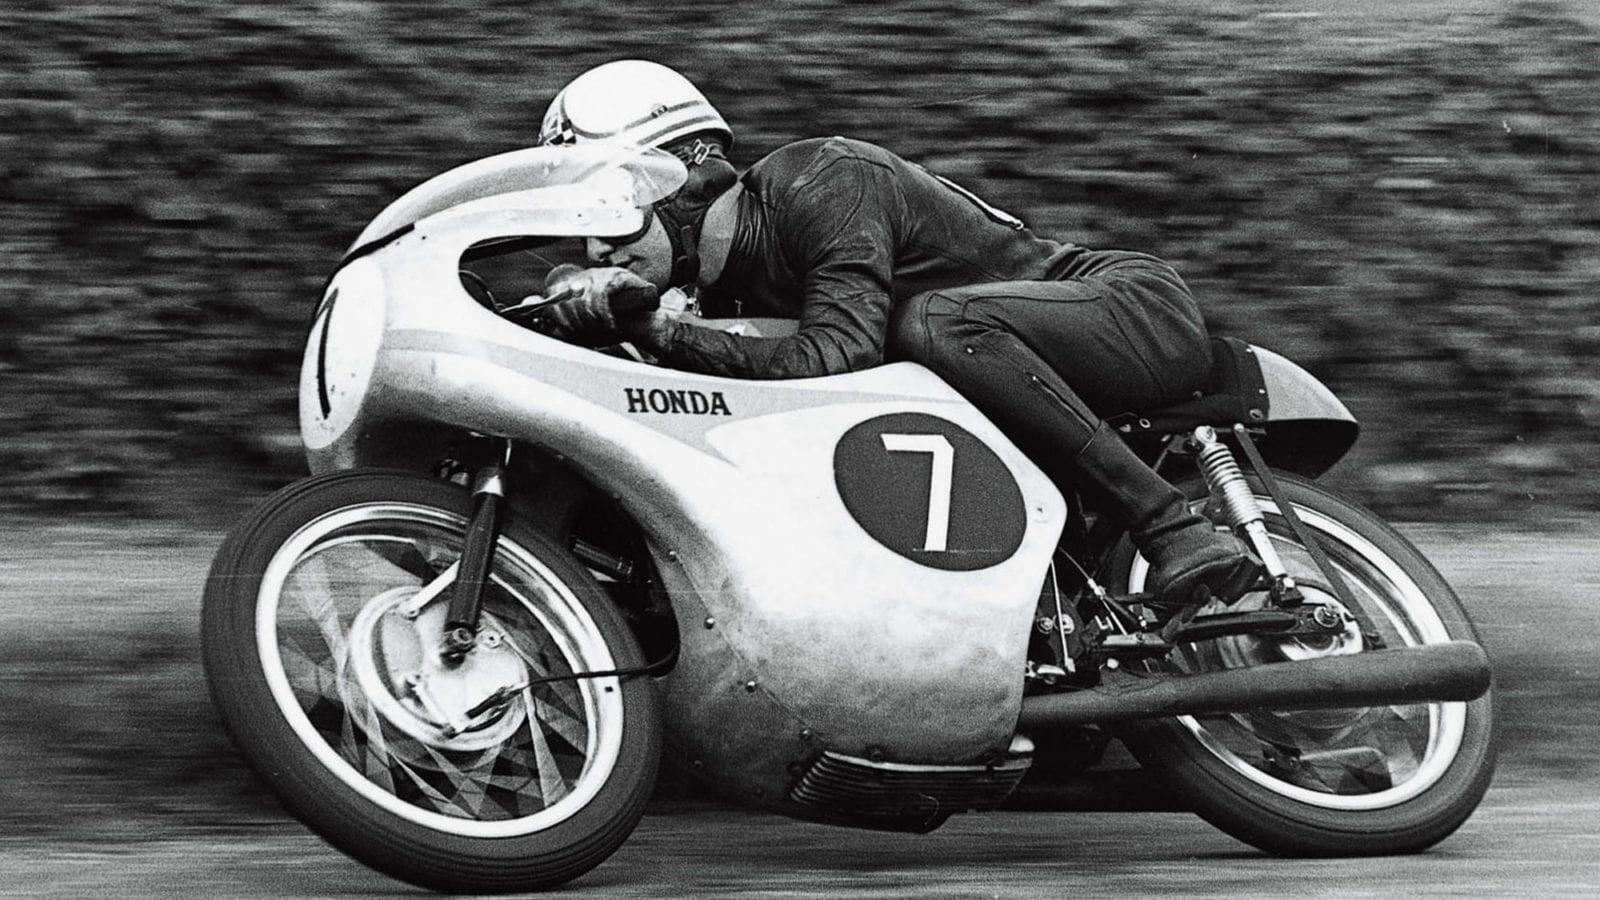 Mike Hailwood in the 1961 Isle of Man TT